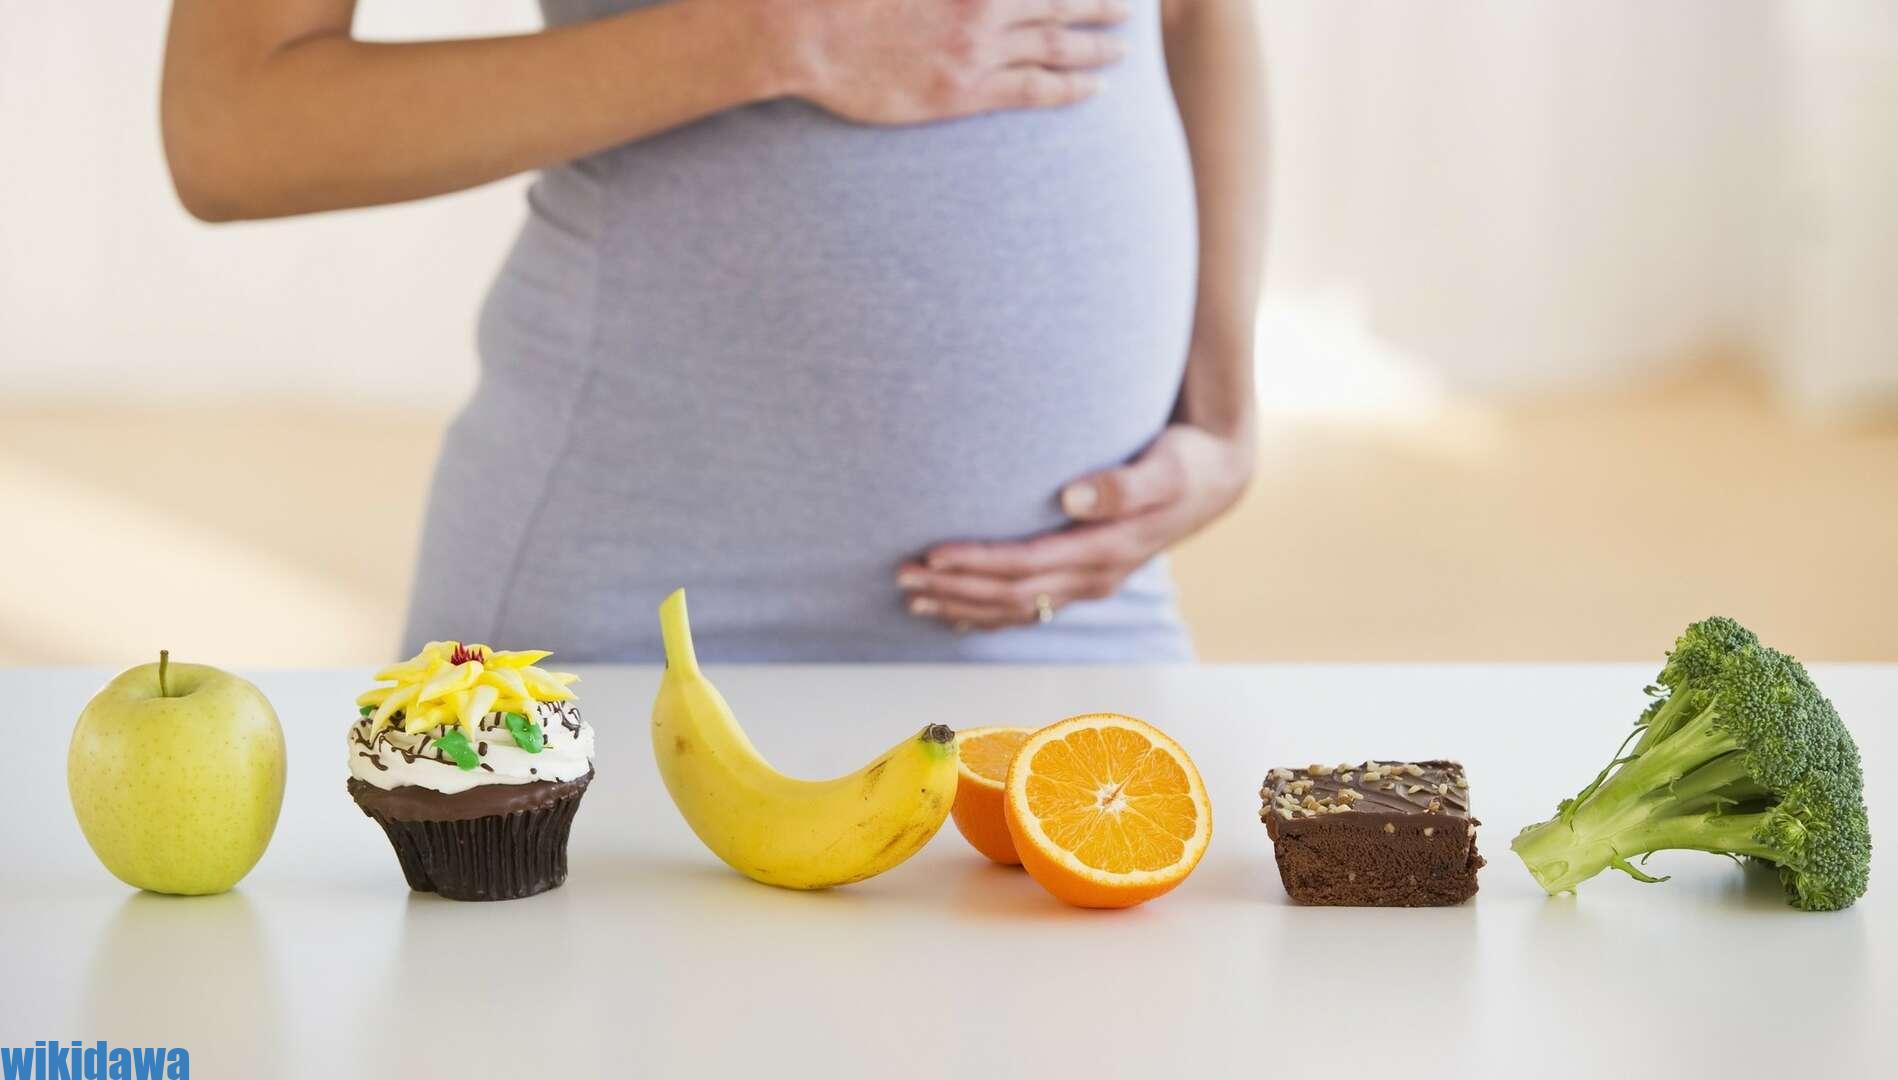 نظام غذائي متكامل للحامل